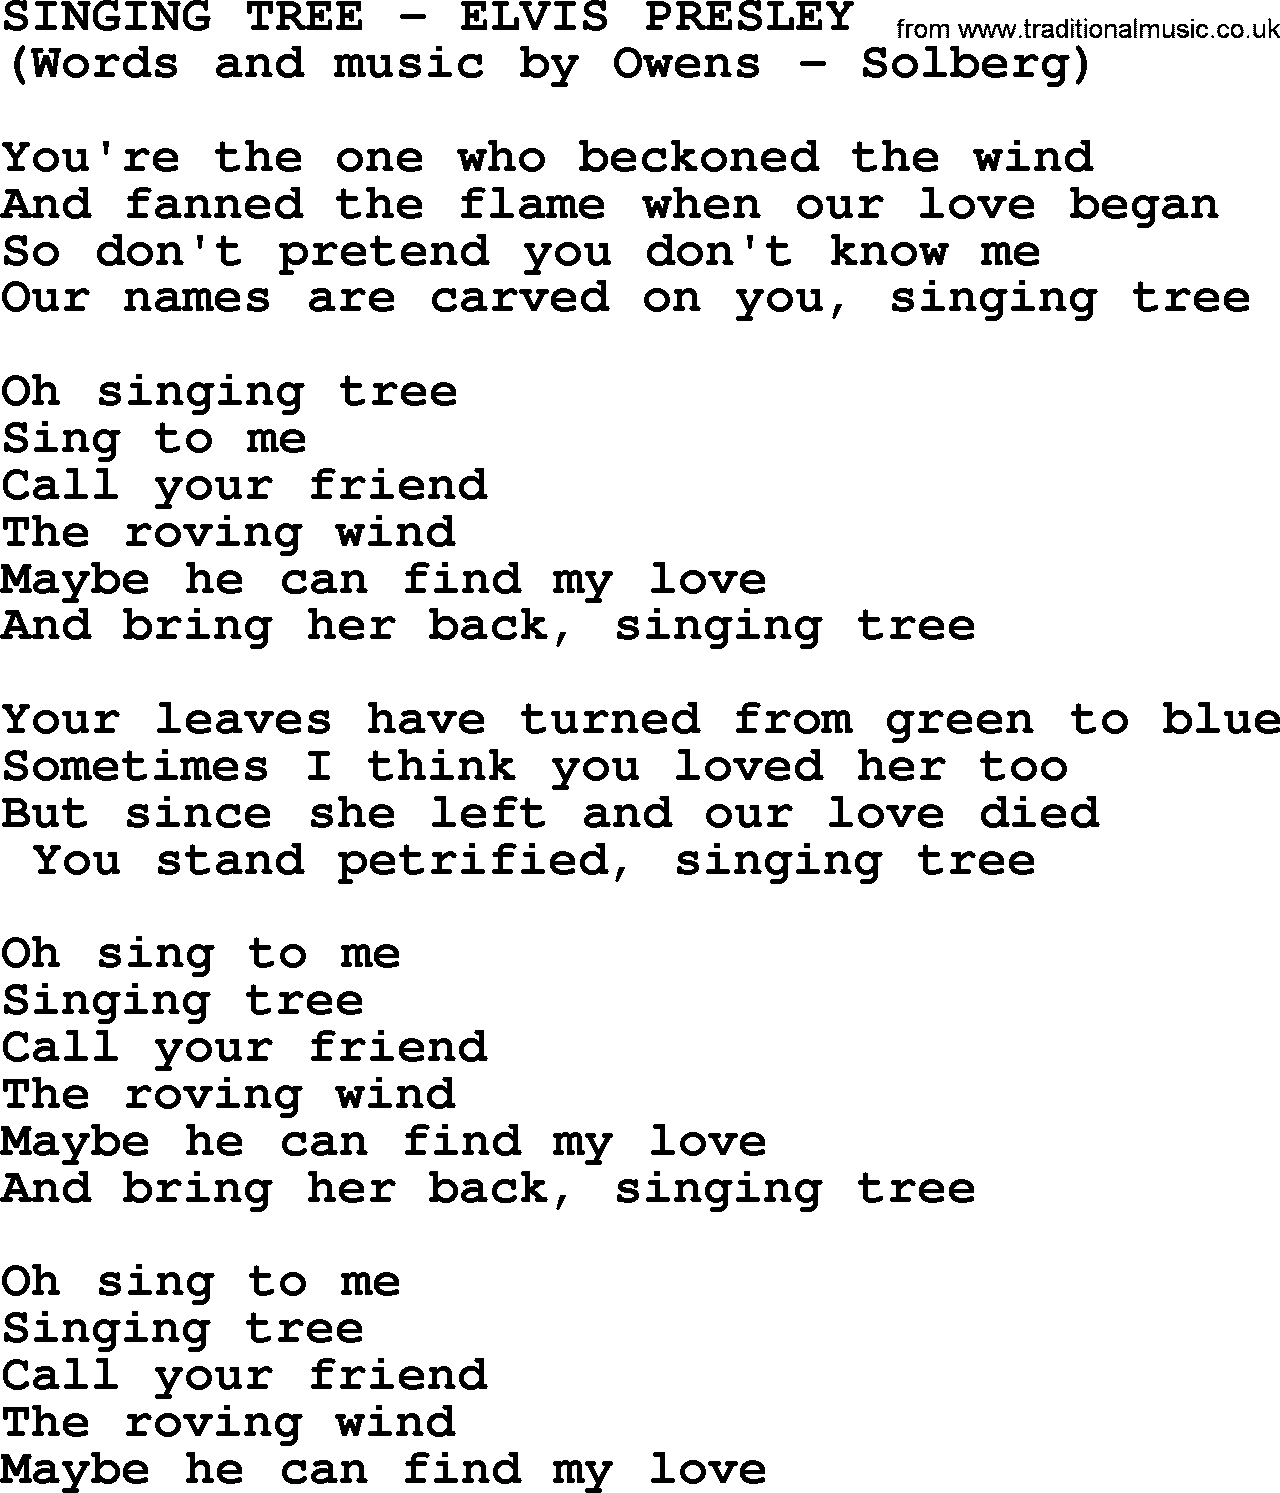 Elvis Presley song: Singing Tree lyrics